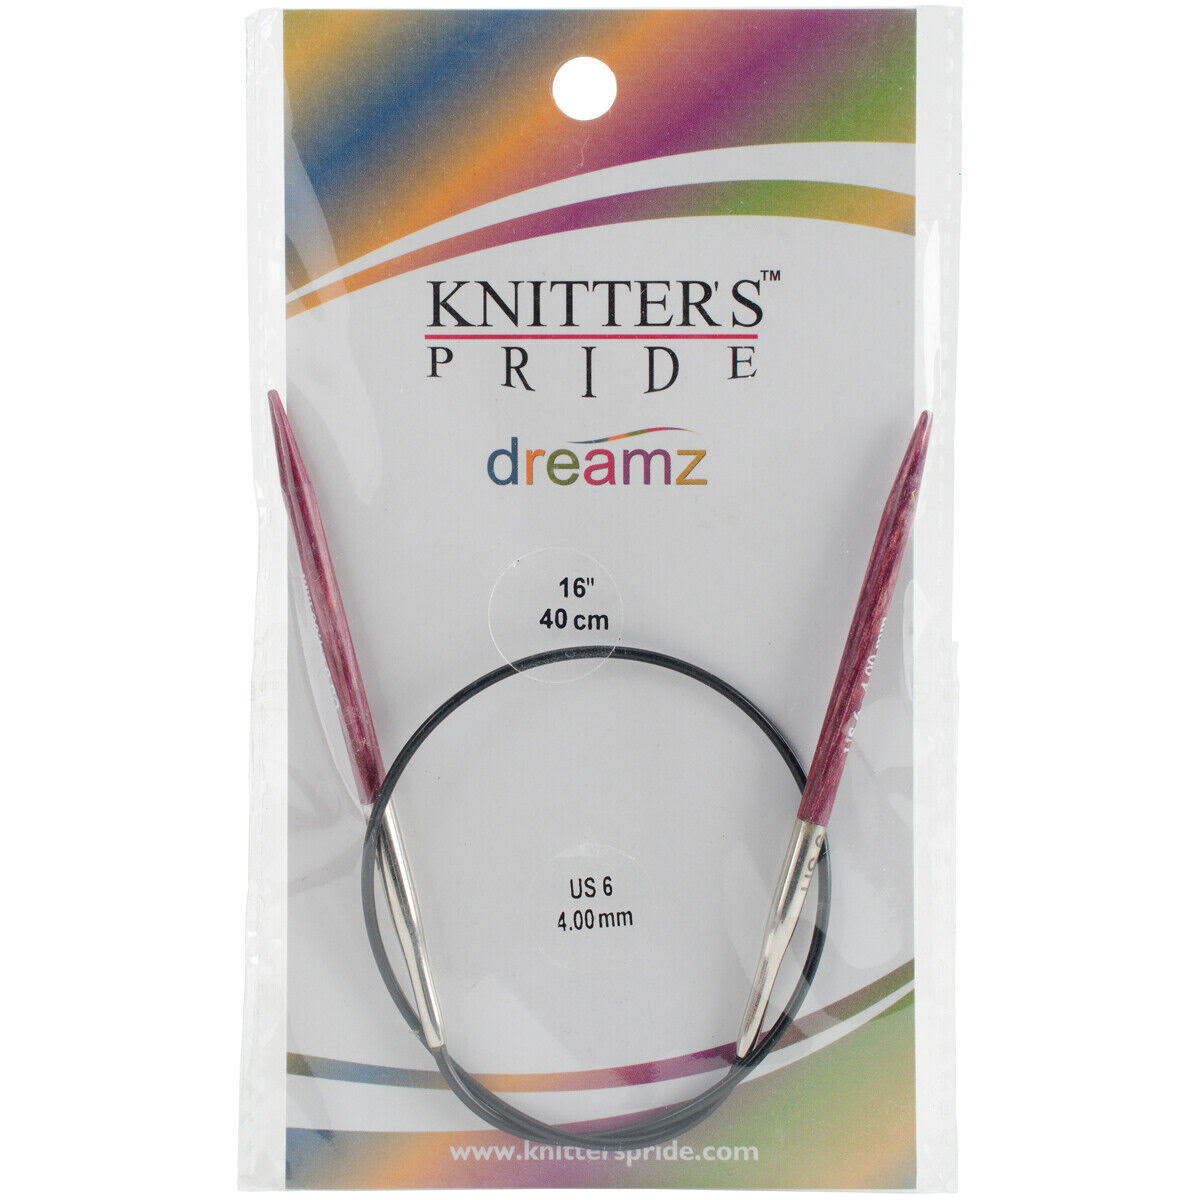 Knitters Pride Dreamz Circular Knitting Needles - Size 6 4mm, 16"